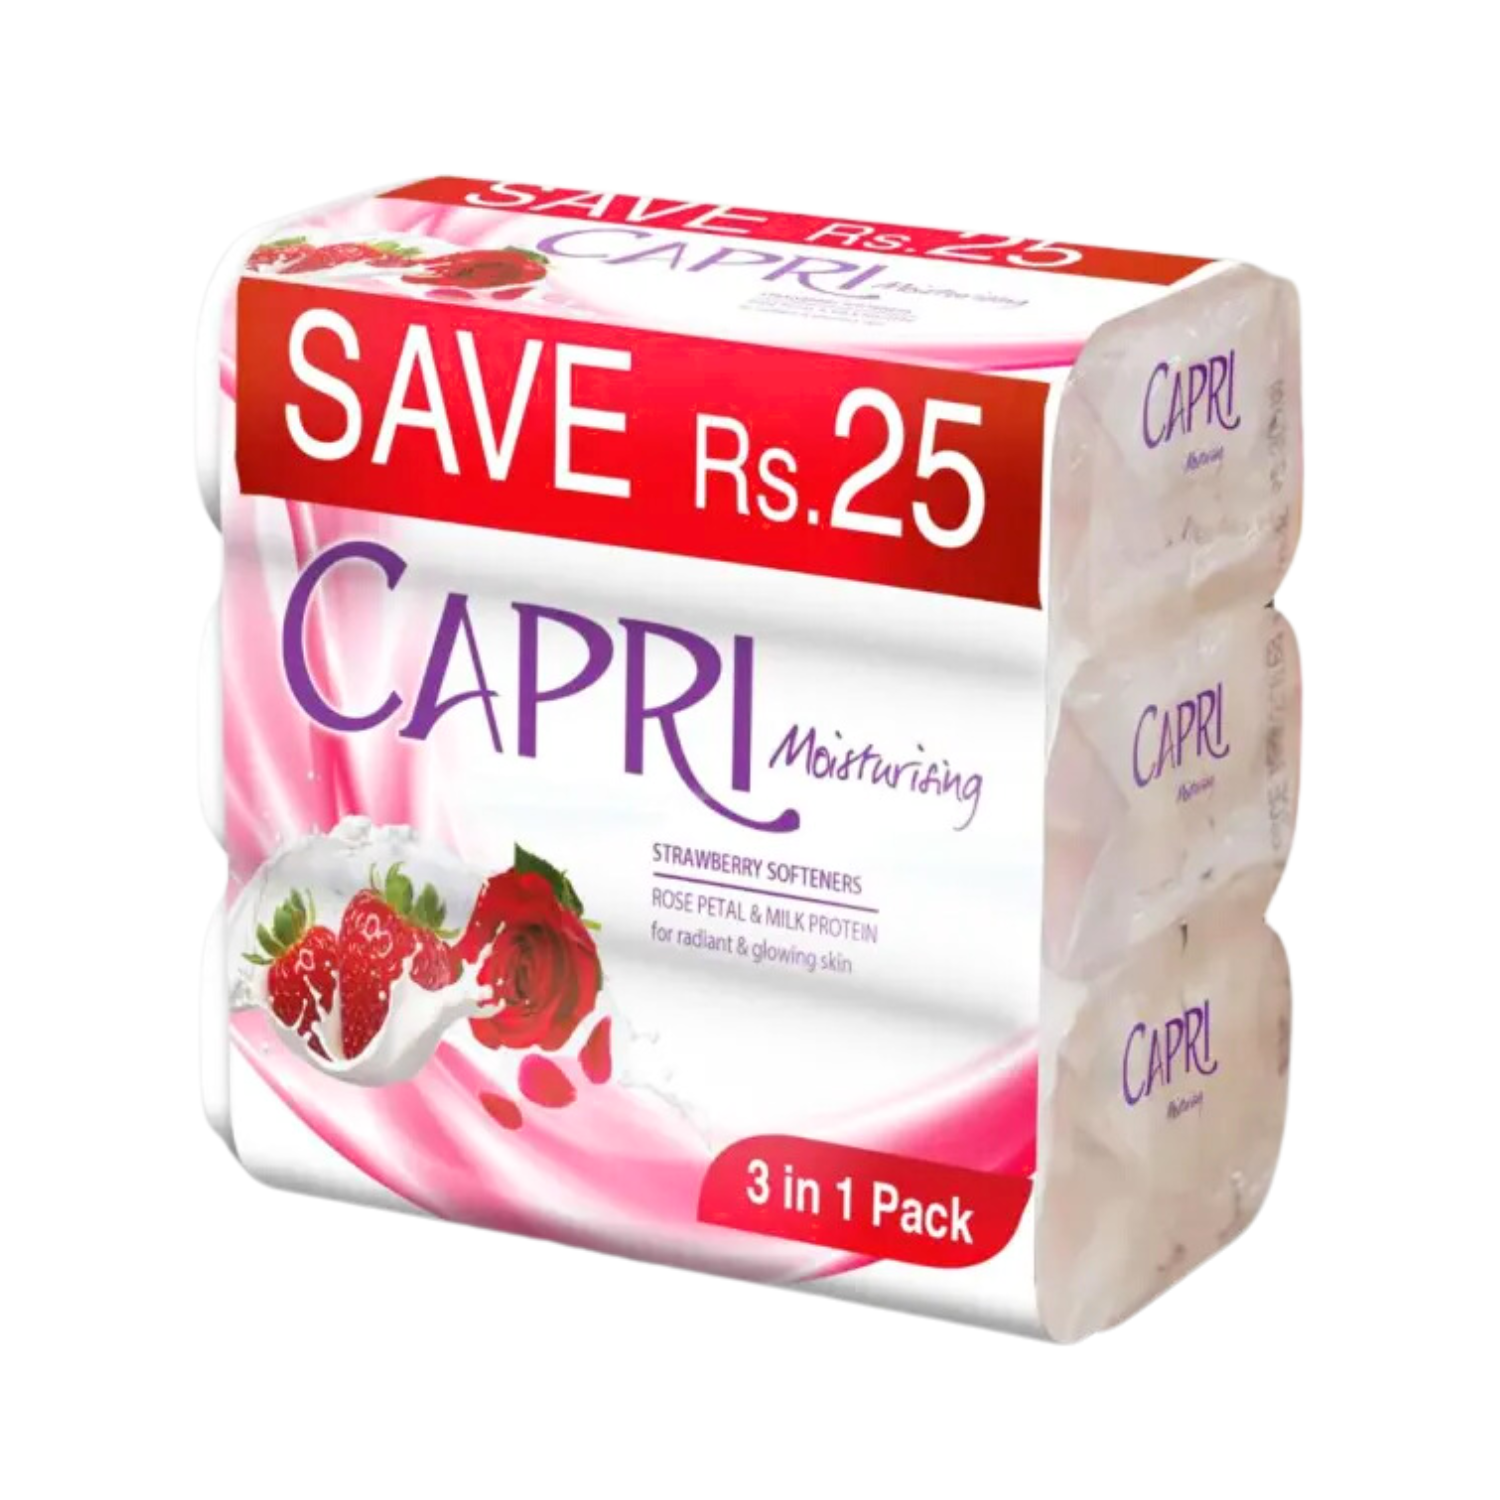 capri-strawberry-softeners-soap-3-in-1-120g